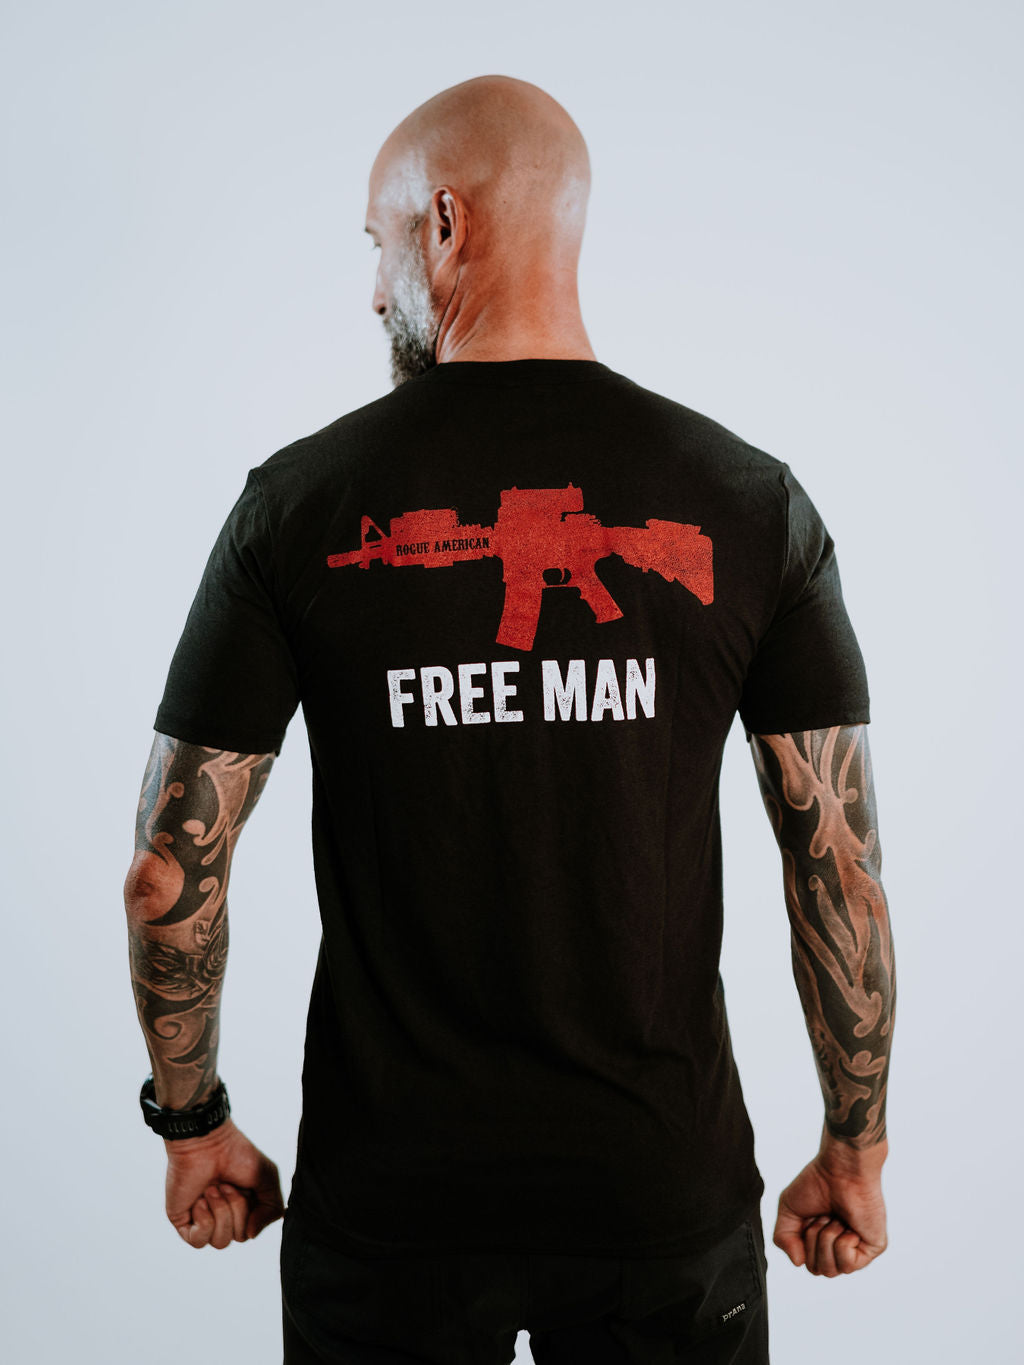 The 'Free Man' Shirt